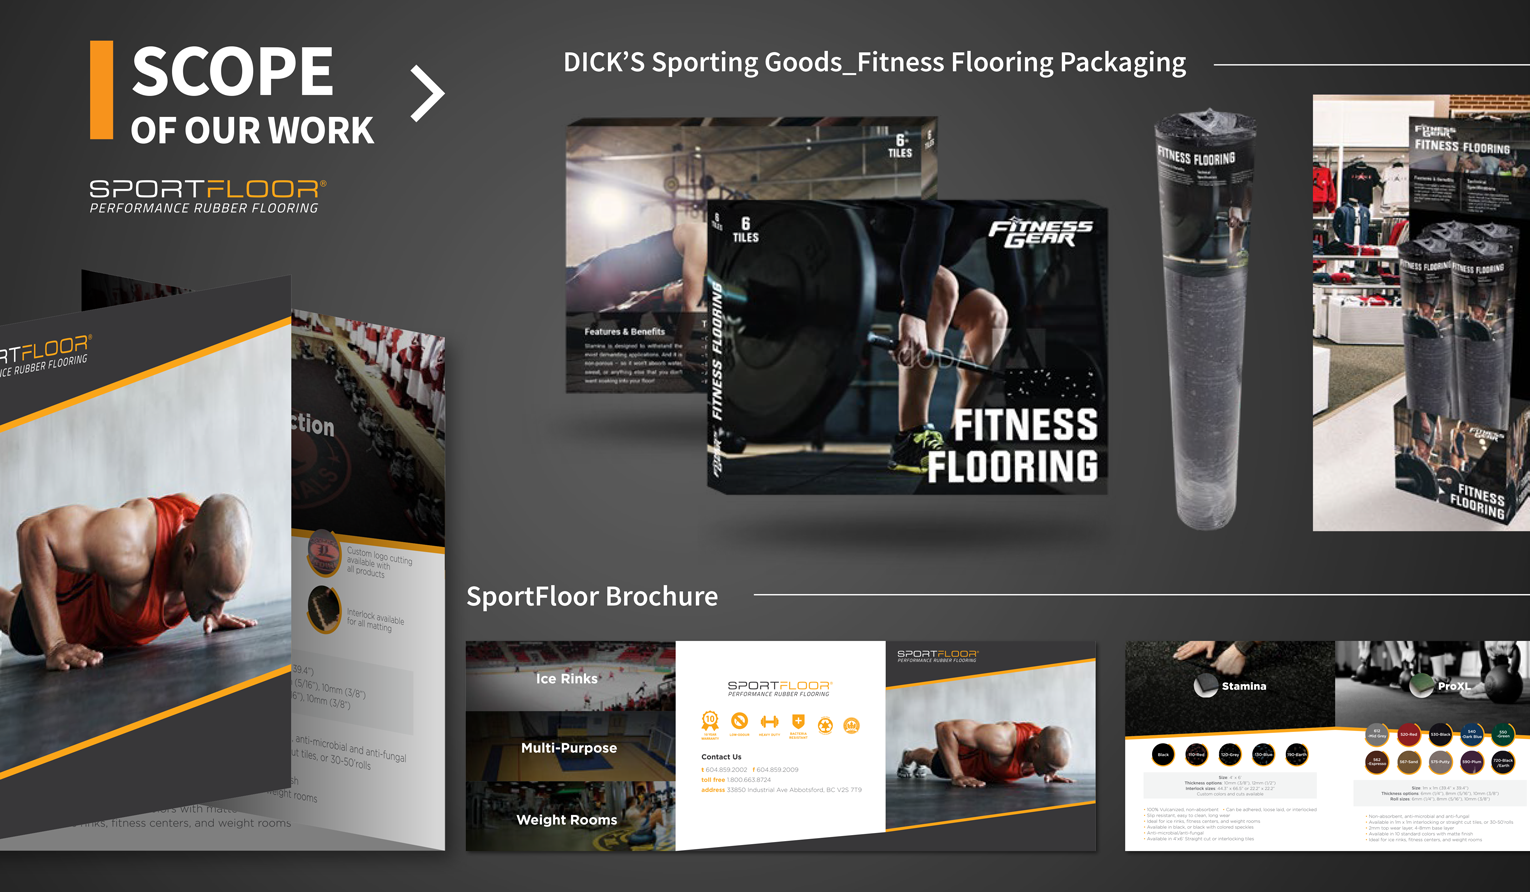 DICK's Sporting Goods Packaging Design